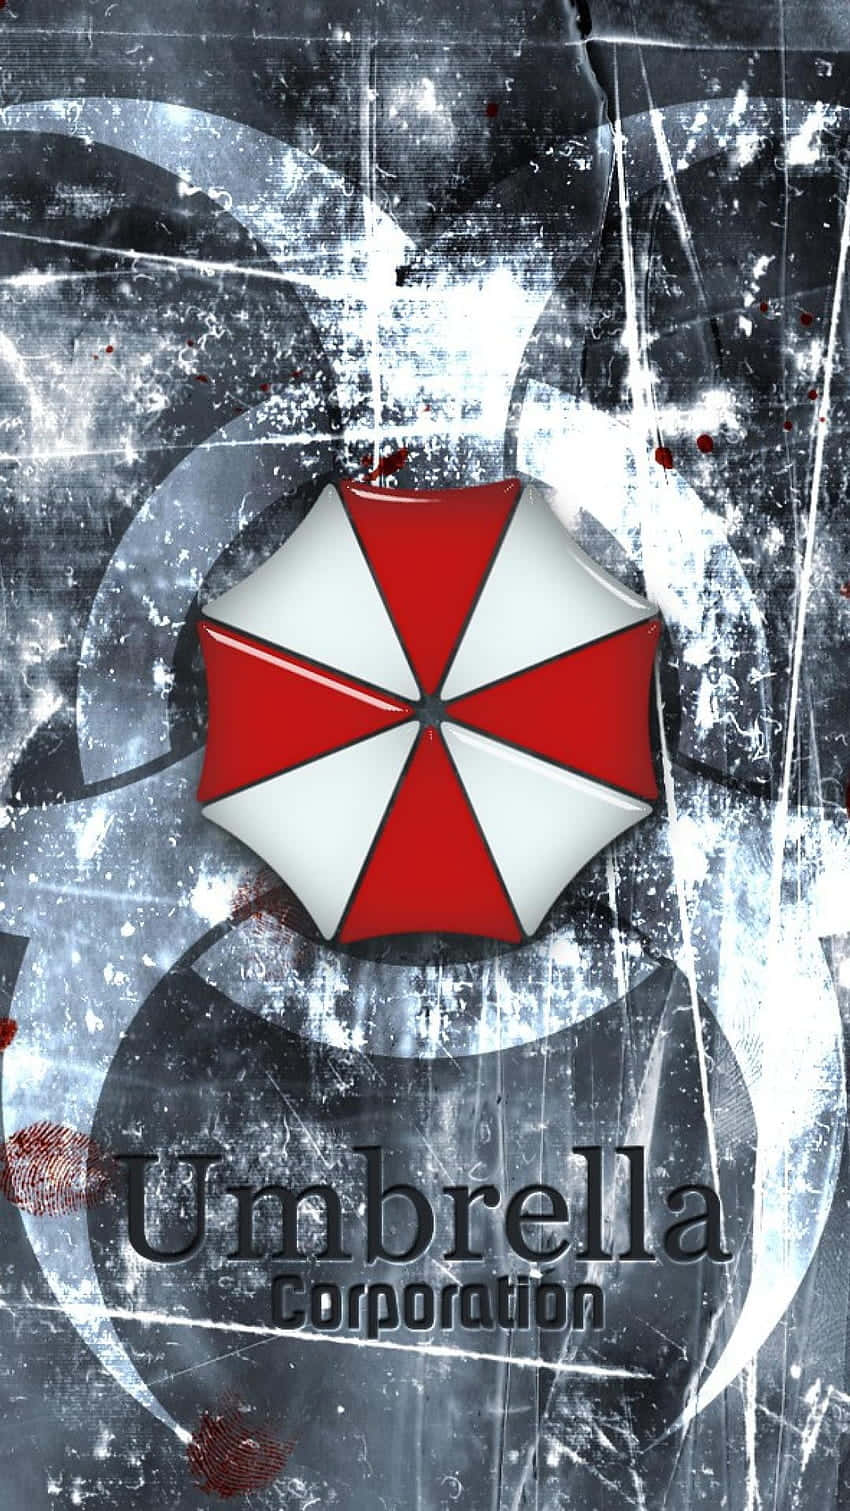 https://wallpapers.com/images/hd/the-iconic-umbrella-corporation-logo-from-resident-evil-series-16ckni9xati3g8et.jpg